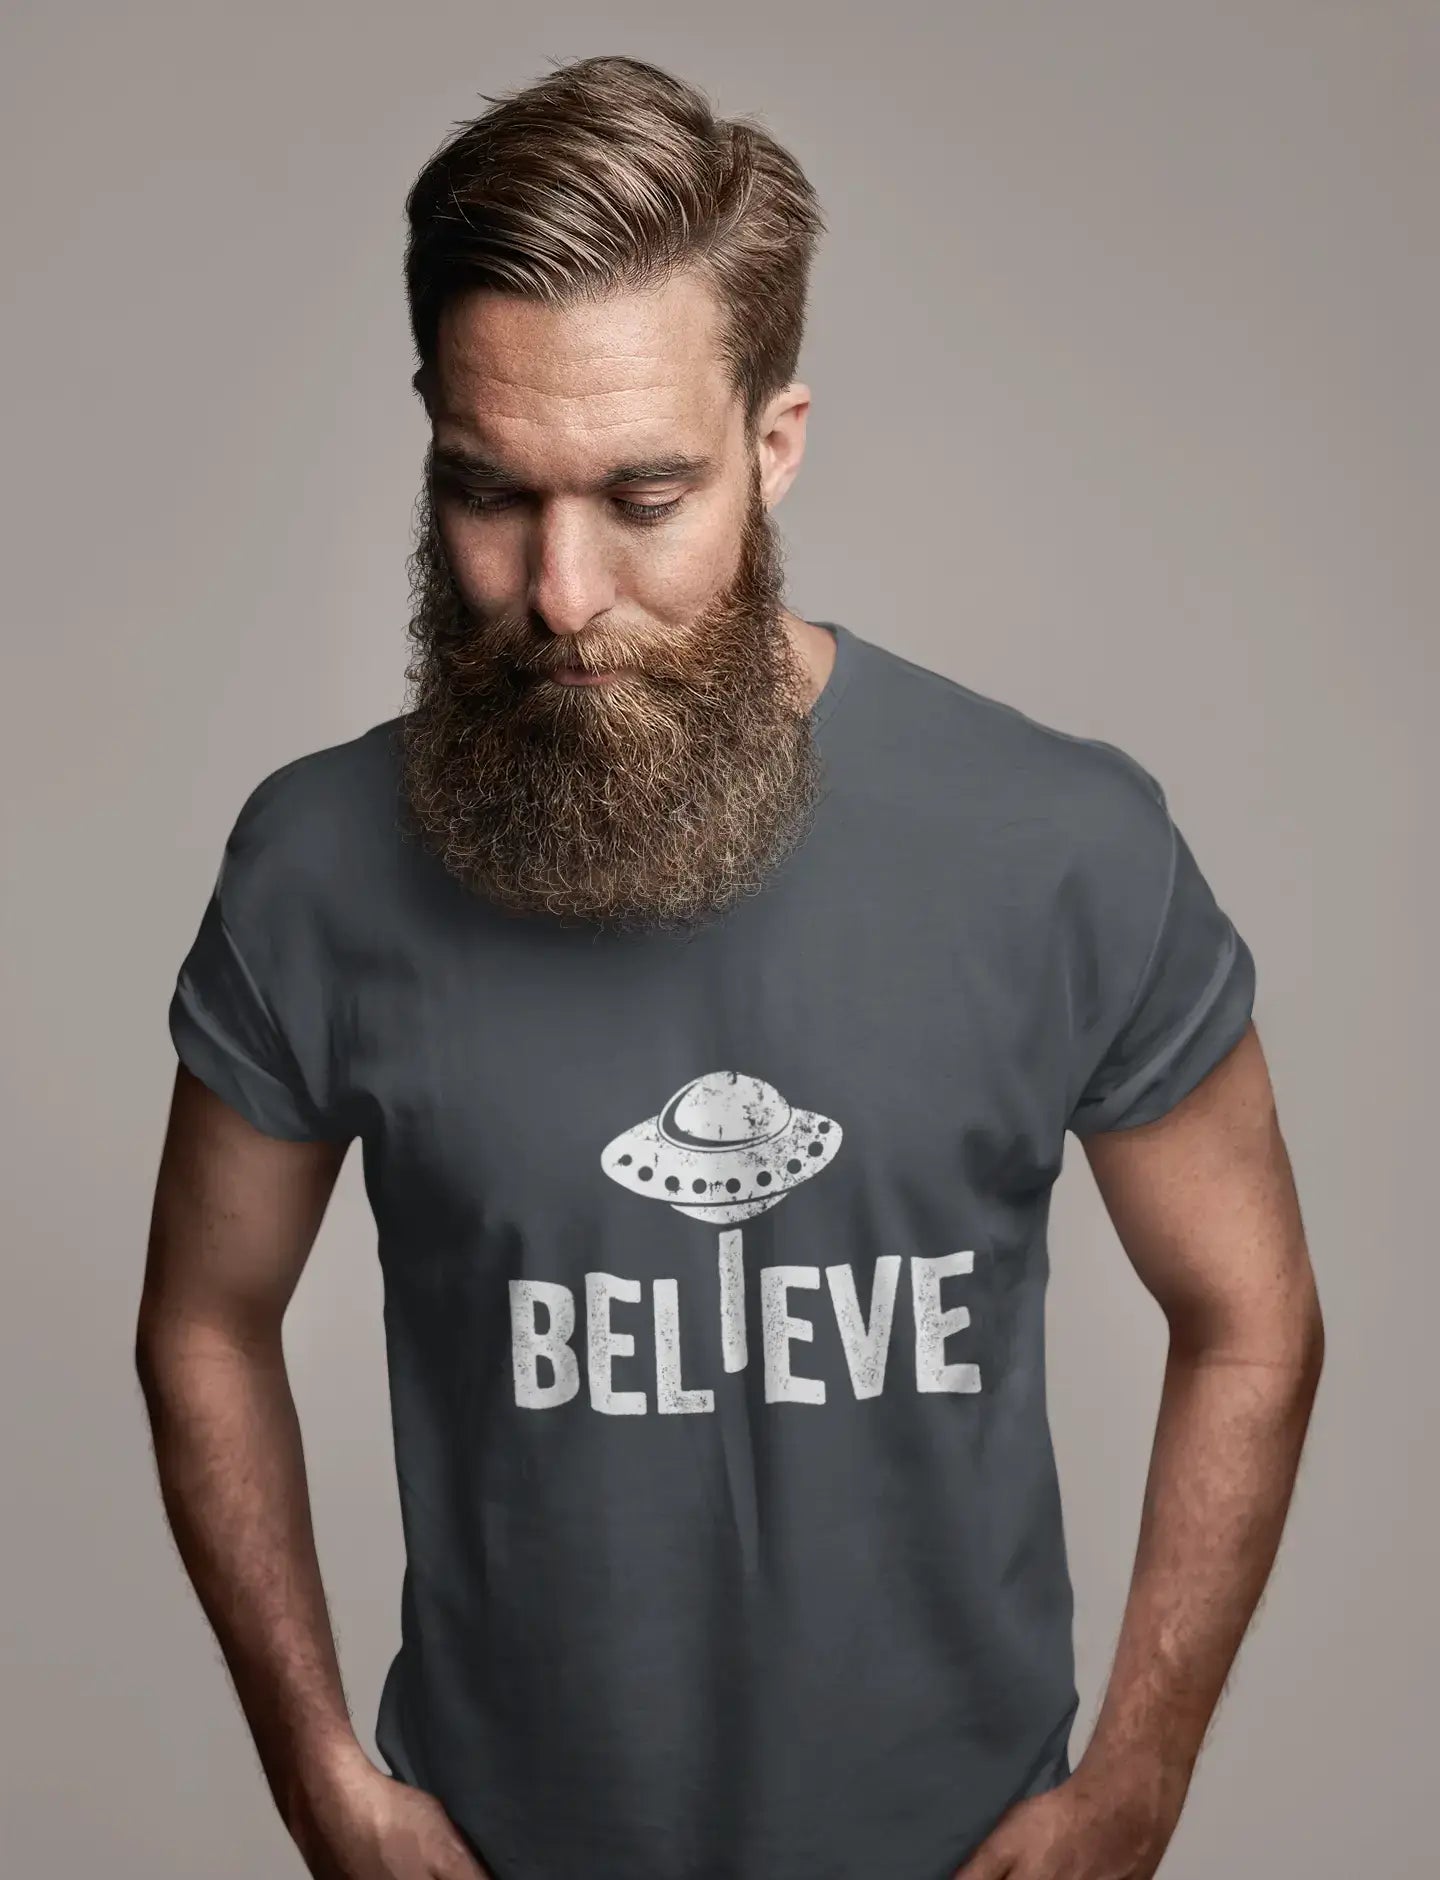 ULTRABASIC - Graphic Men's Believe UFO Alien T-Shirt Funny Casual Letter Print Tee Denim